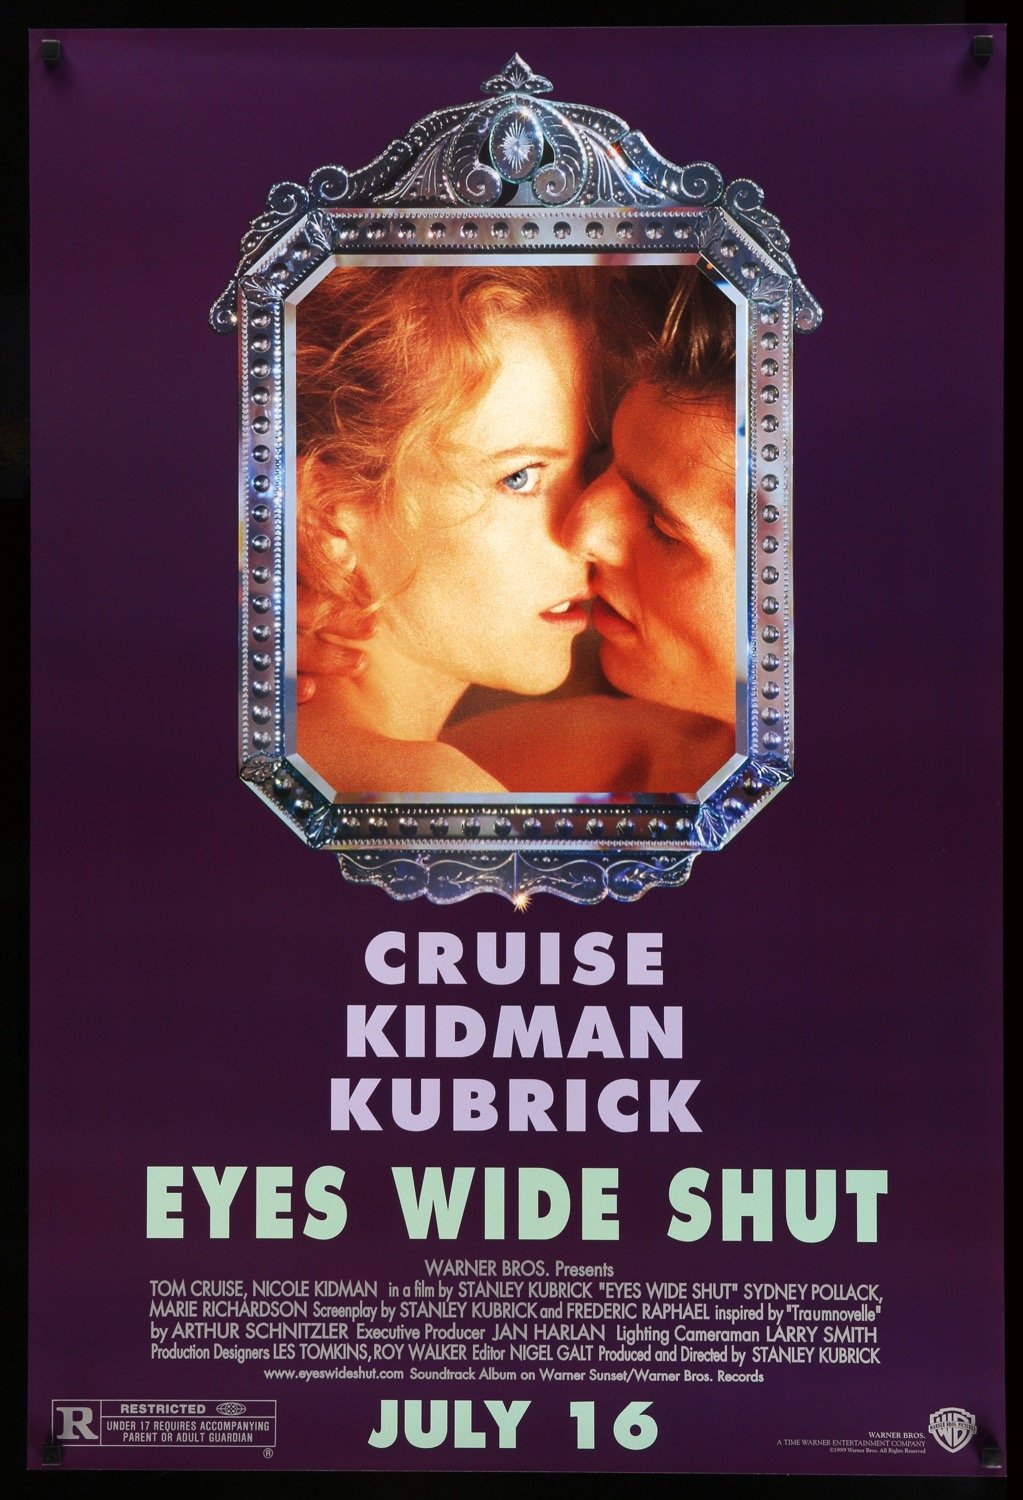 Eyes Wide Shut (1999) original movie poster for sale at Original Film Art